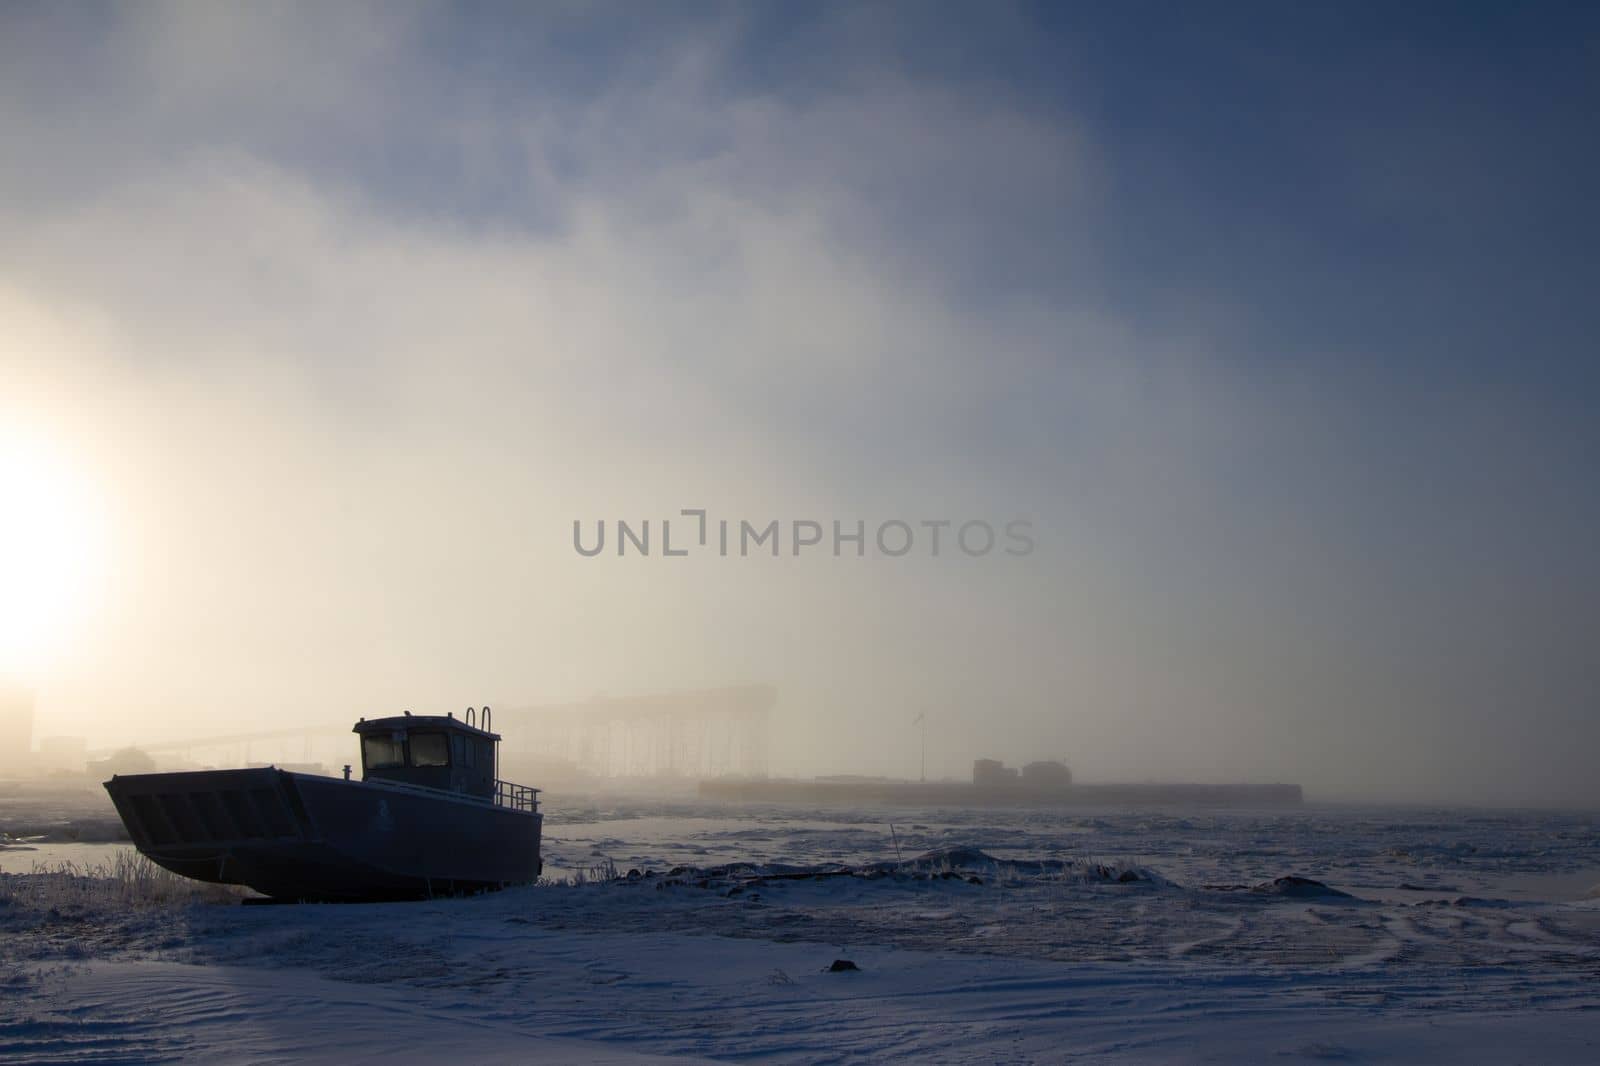 Landing craft centre console aluminum power boat sitting on snow covered beach, near Churchill, Manitoba, Canada